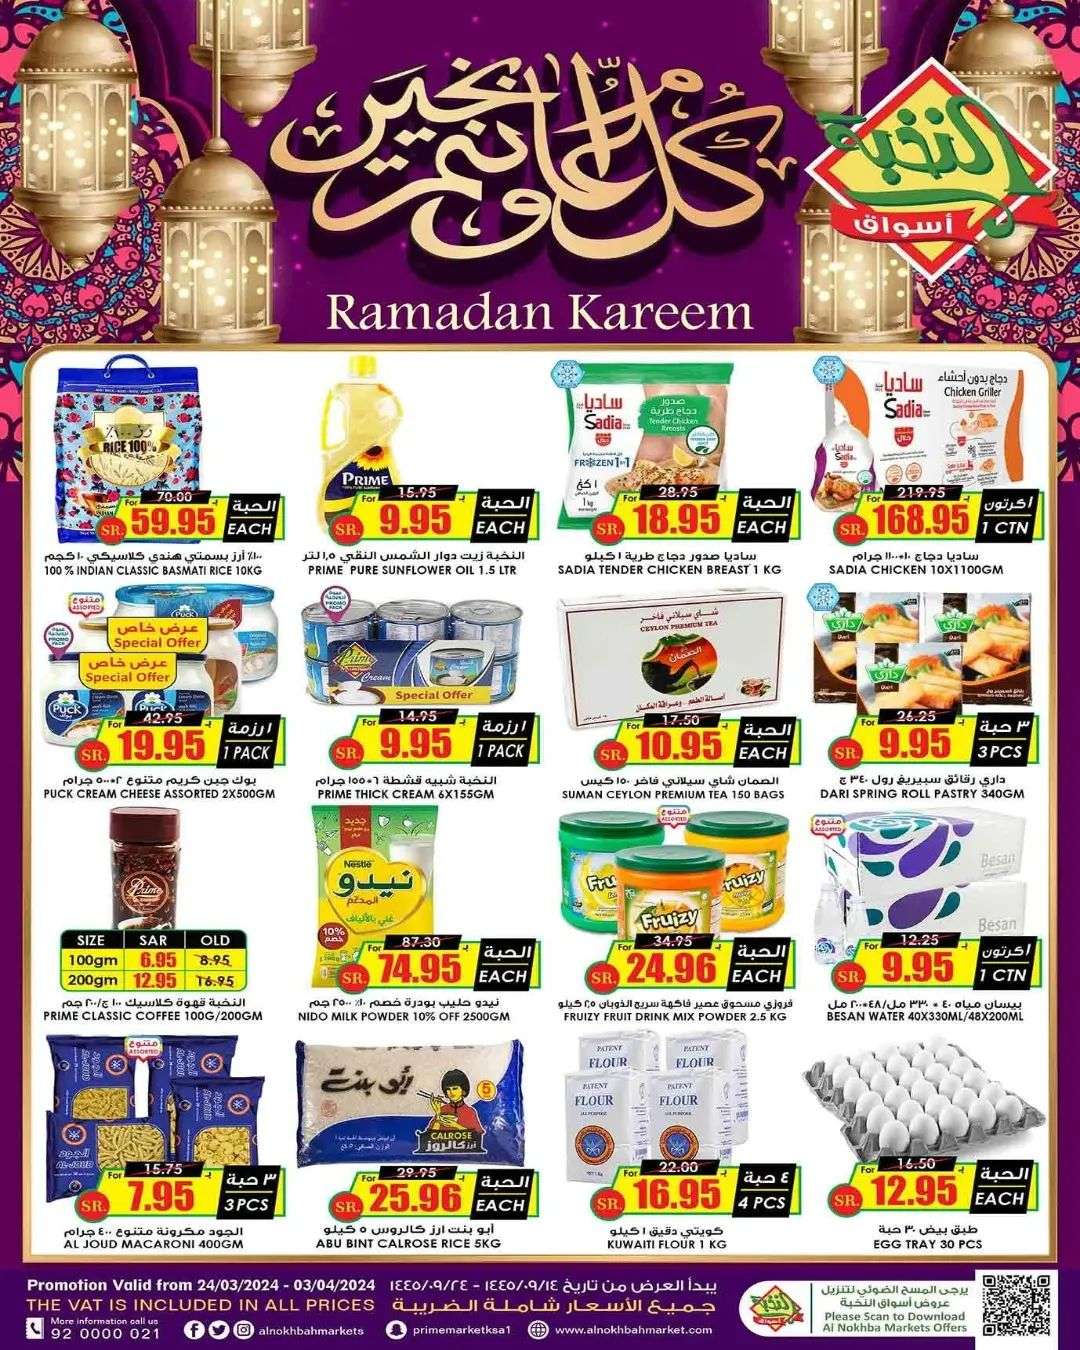 qWg8Vm - عروض رمضان 2024 : عروض أسواق النخبة الأسبوعية صفحة واحدة الأحد 24 مارس 2024 أقل الأسعار